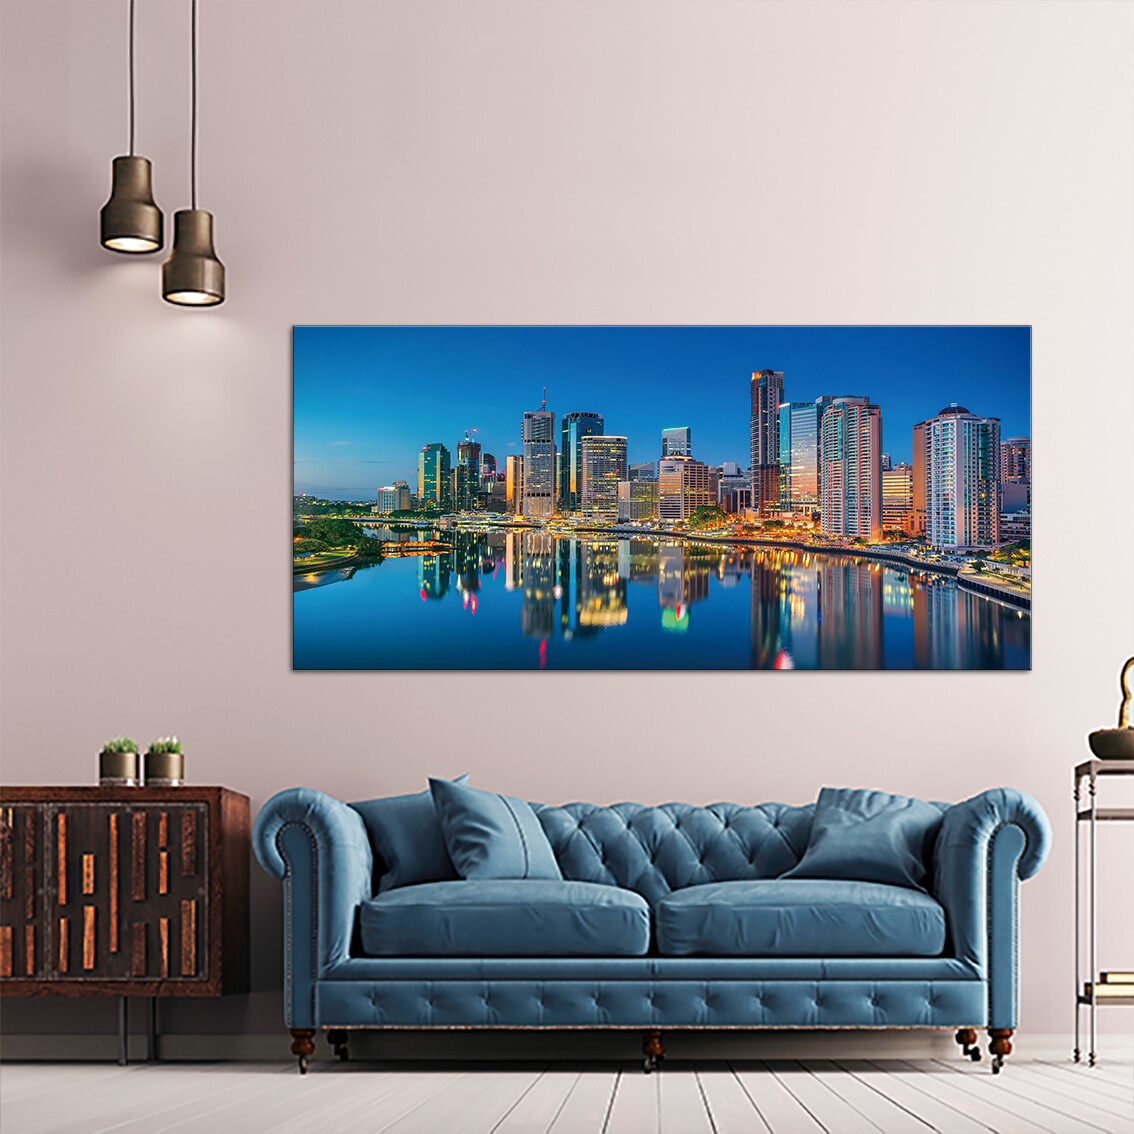 Brisbane Skyline - Modern Luxury Wall art Printed on Acrylic Glass - Frameless and Ready to Hang